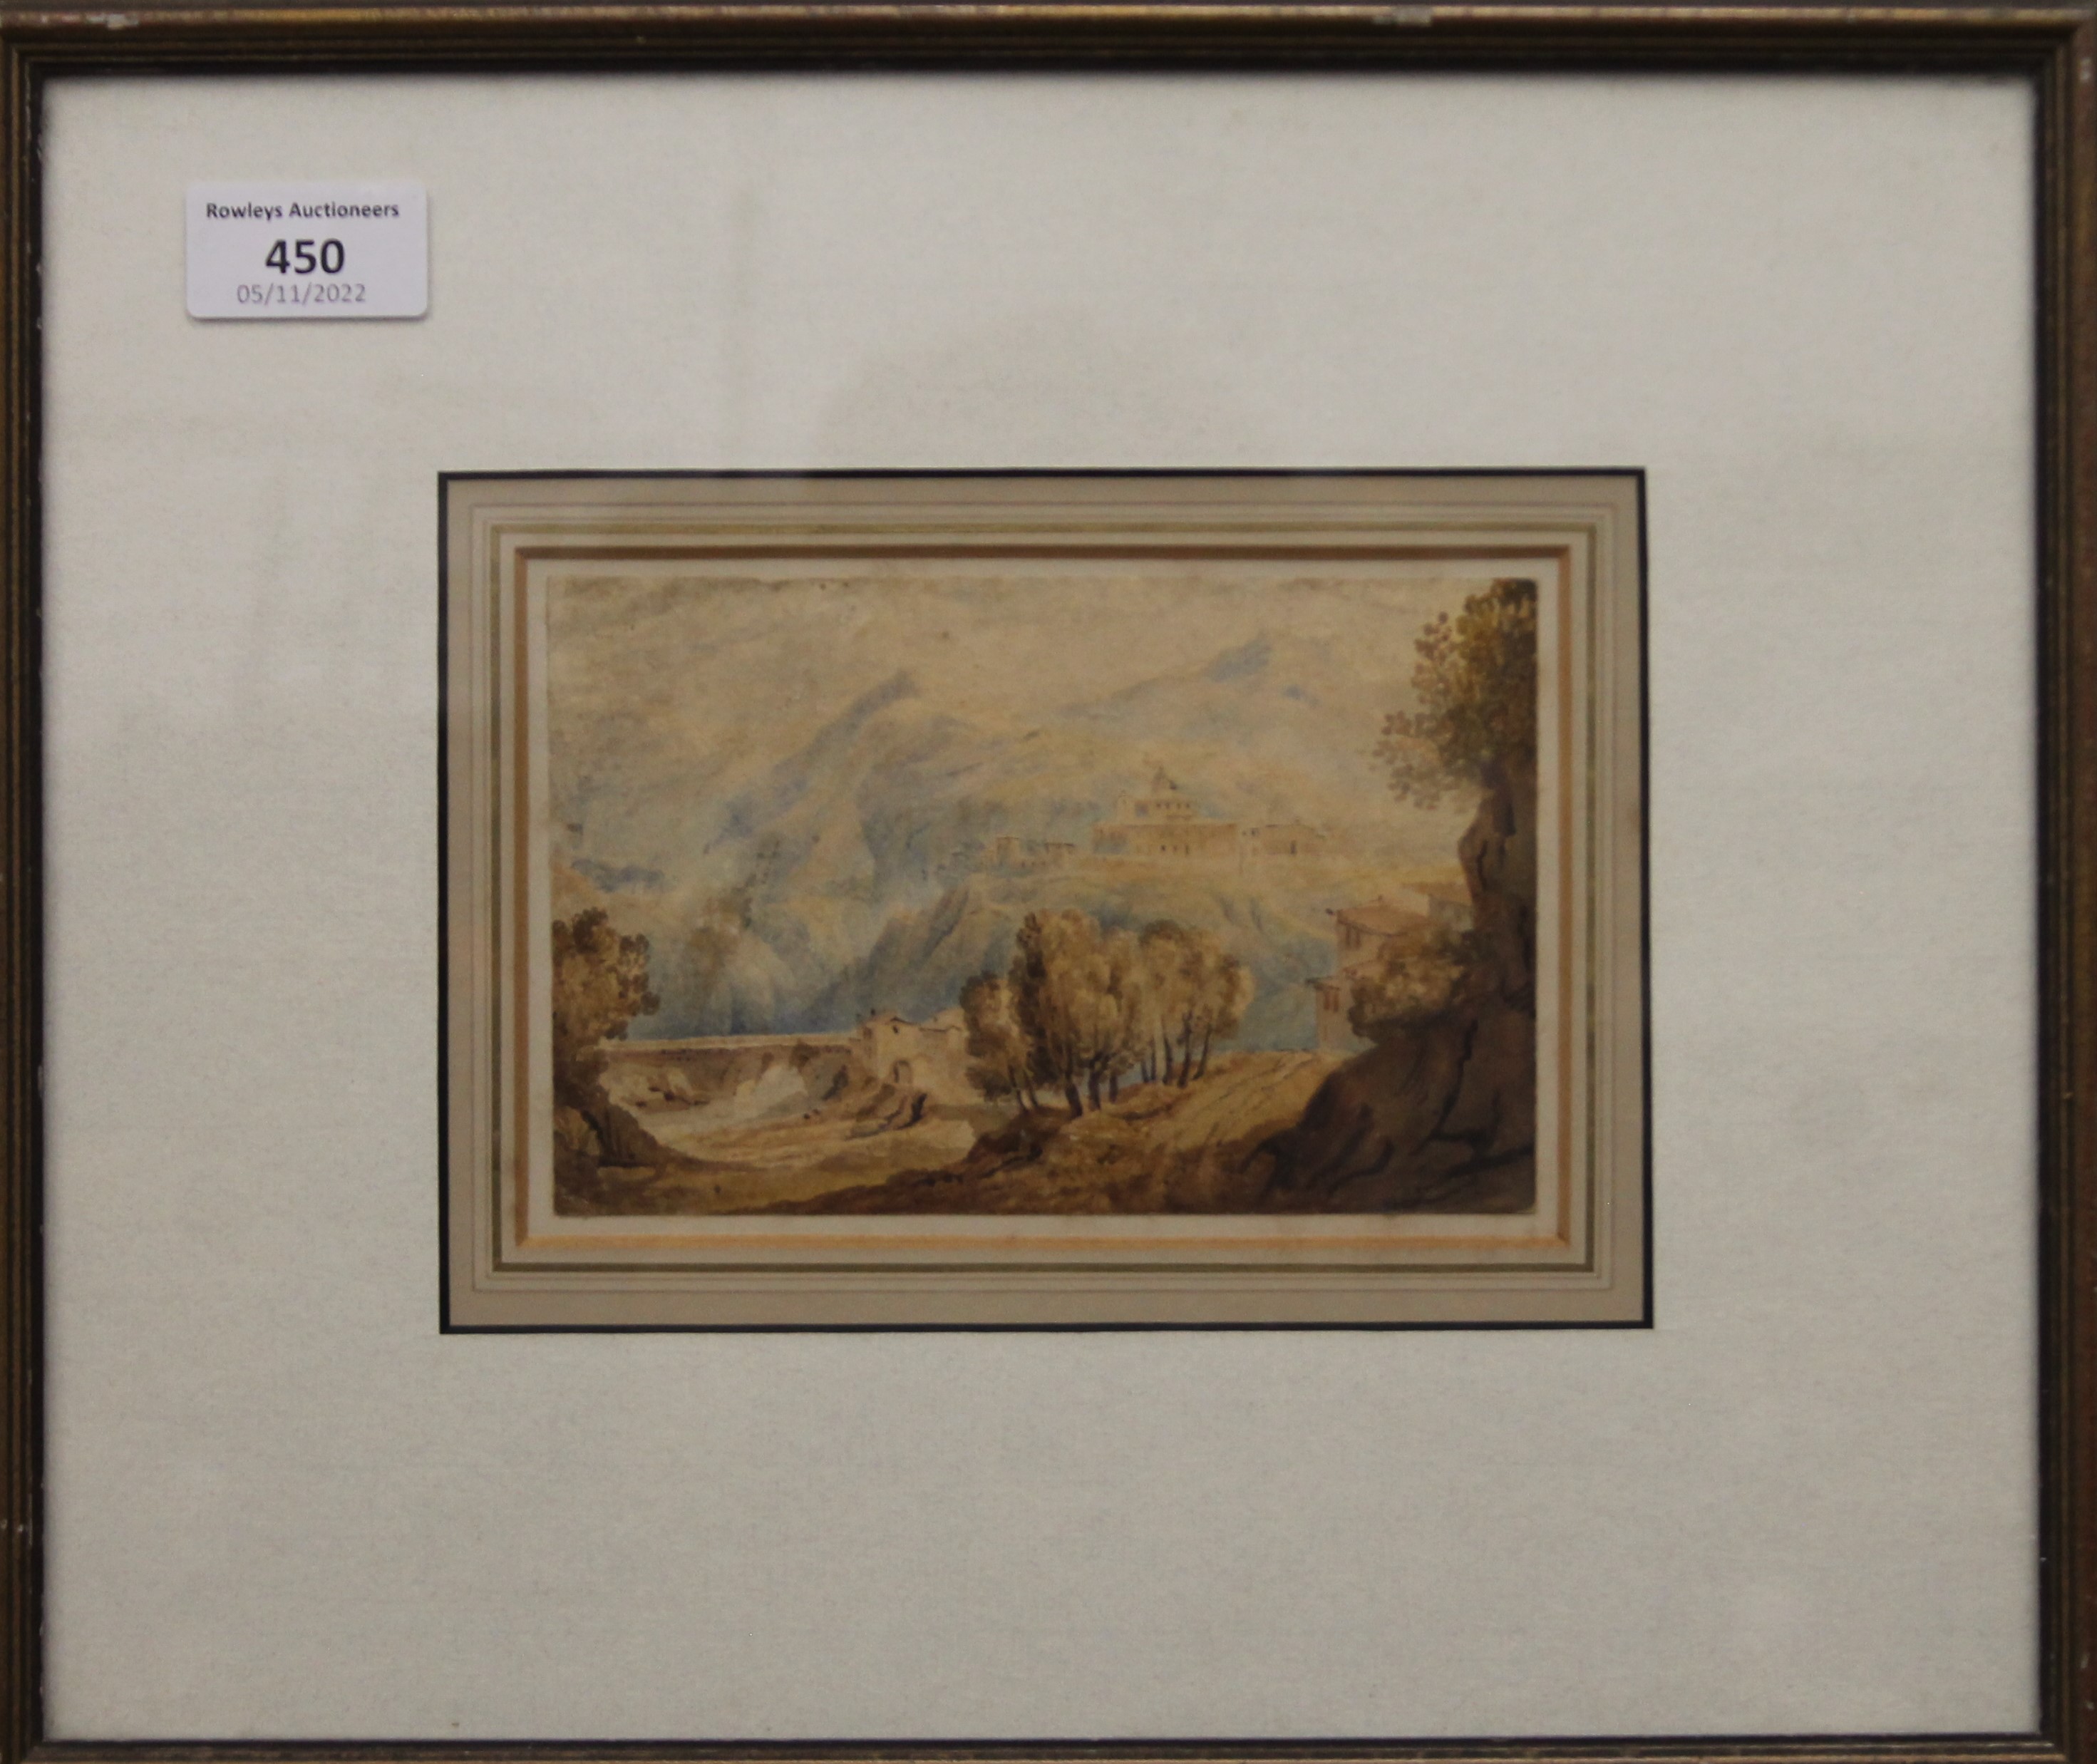 Follower of EDWARD LEAR, Italian Scene, watercolour, framed and glazed. 15.5 x 10 cm. - Image 2 of 2